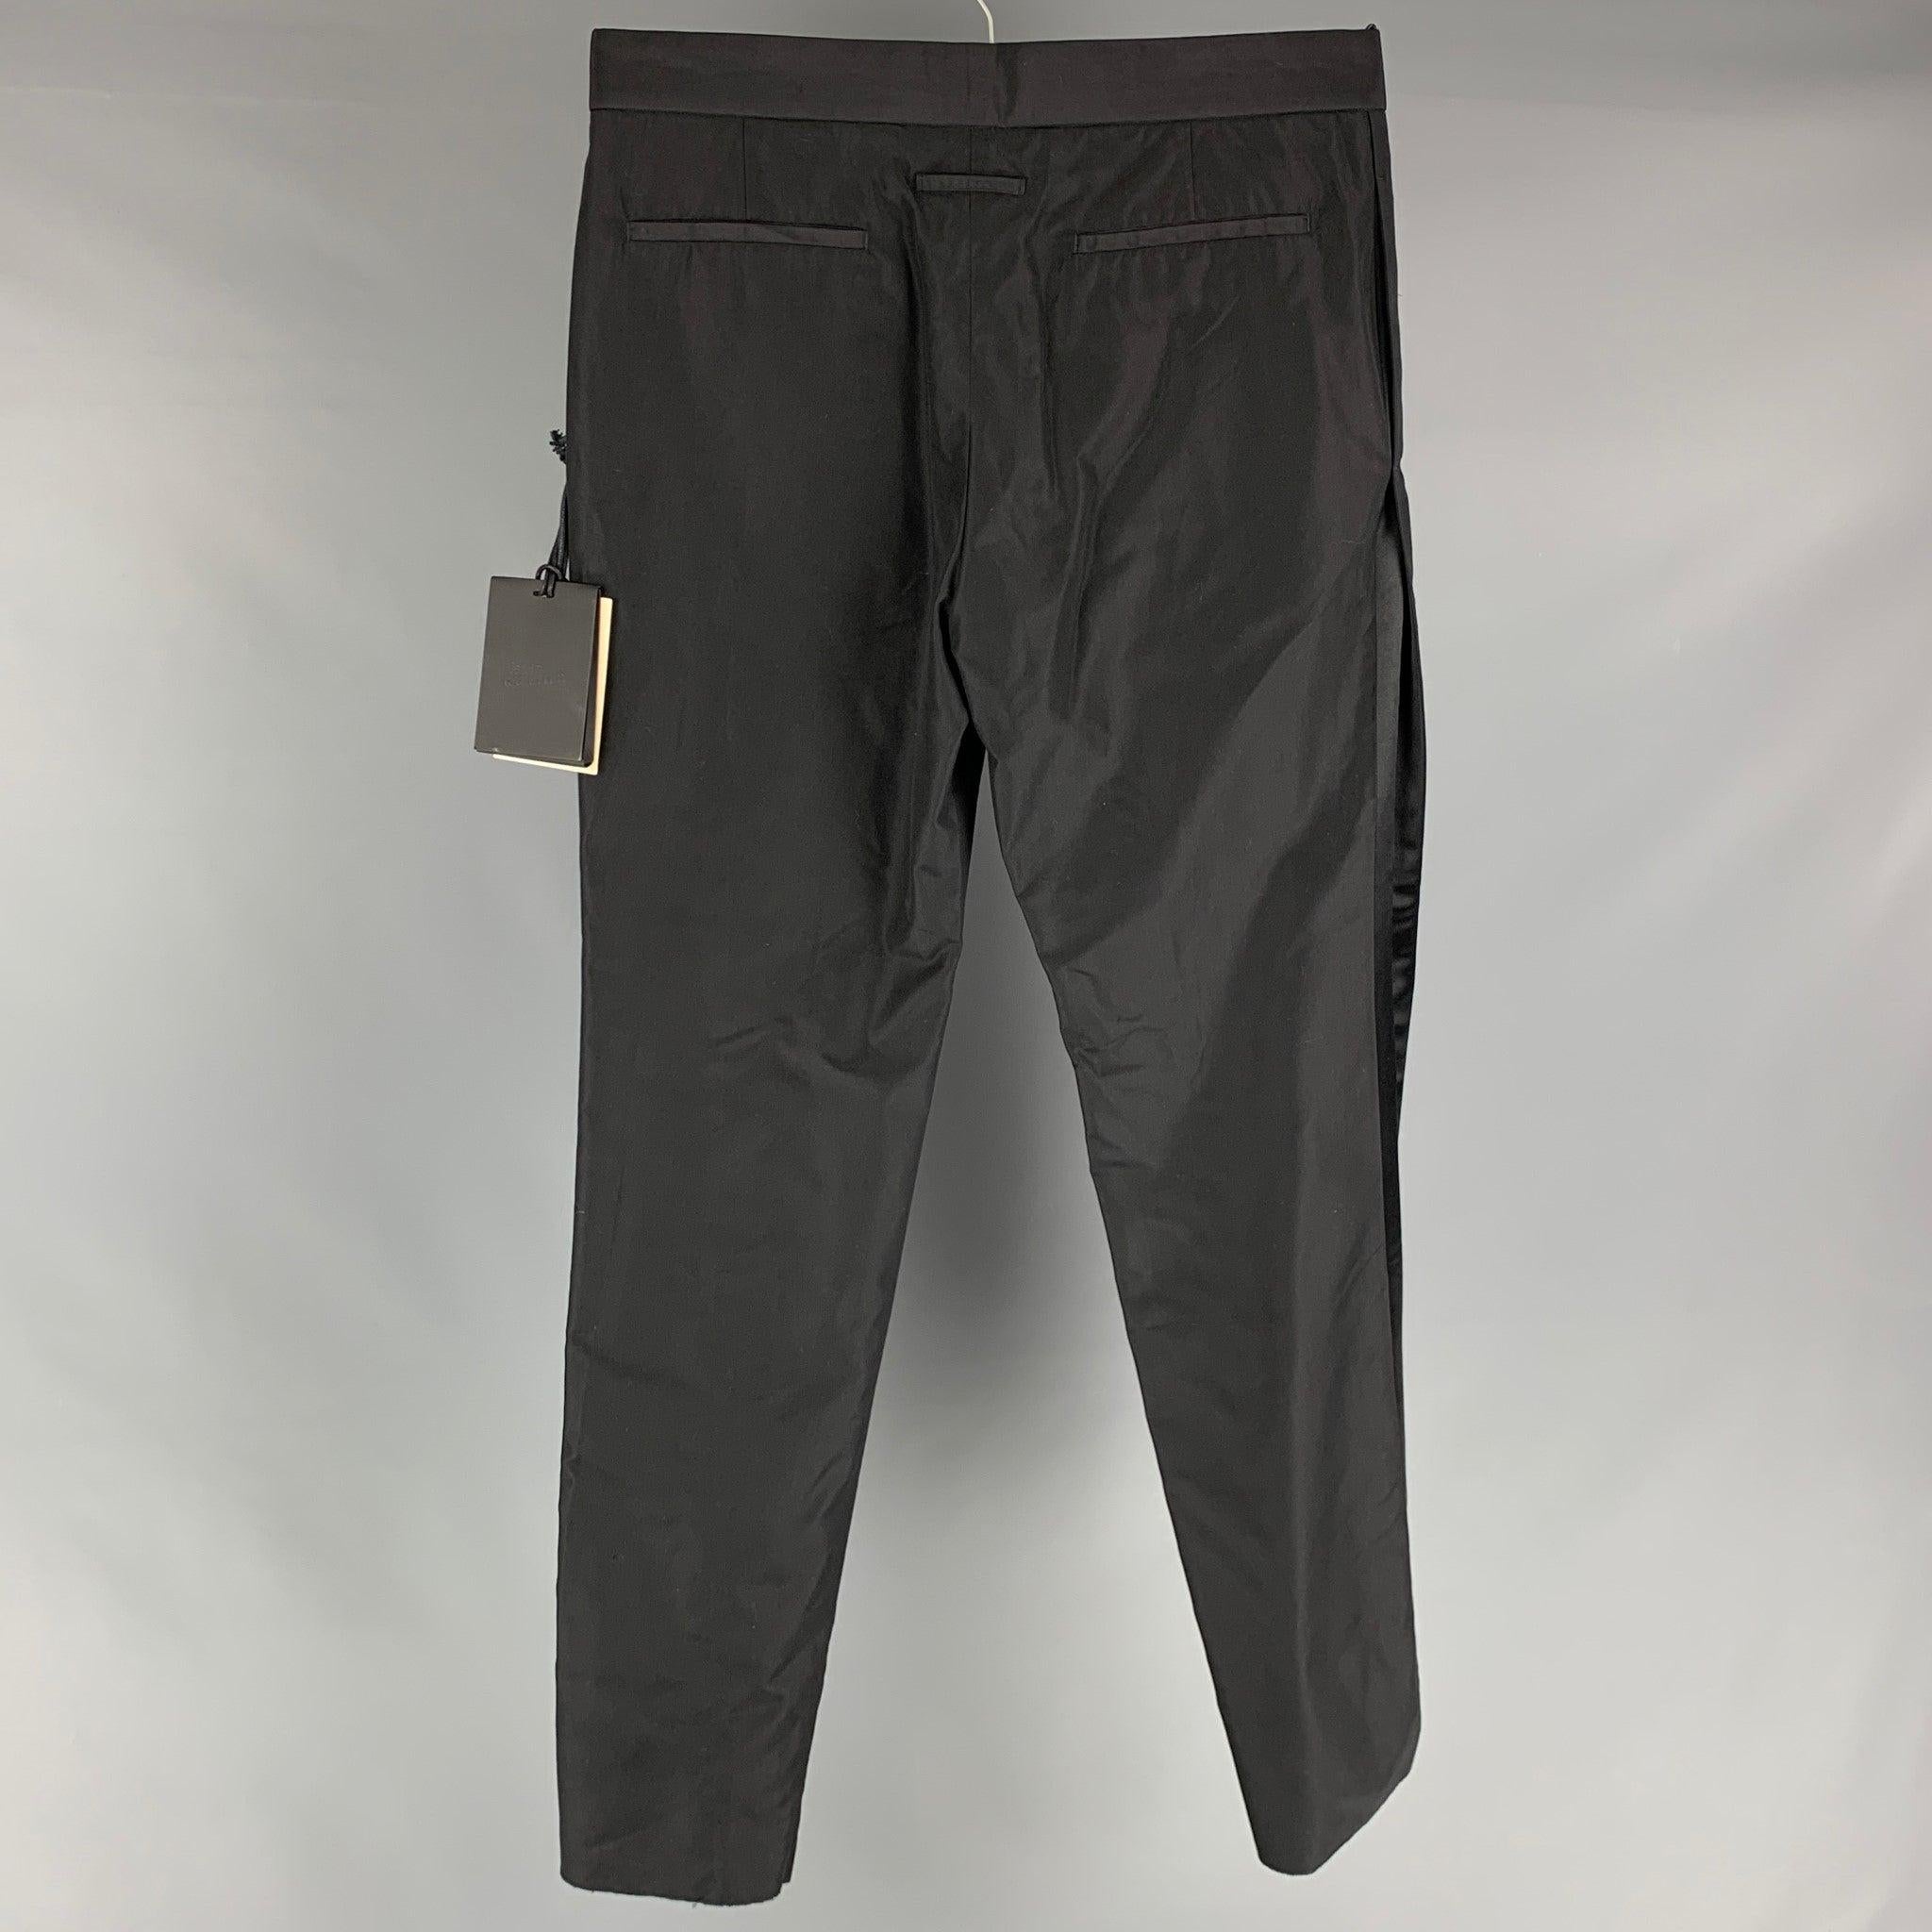 JEAN PAUL GAULTIER Size 34 Black Solid Silk Zip Up Dress Pants For Sale 1